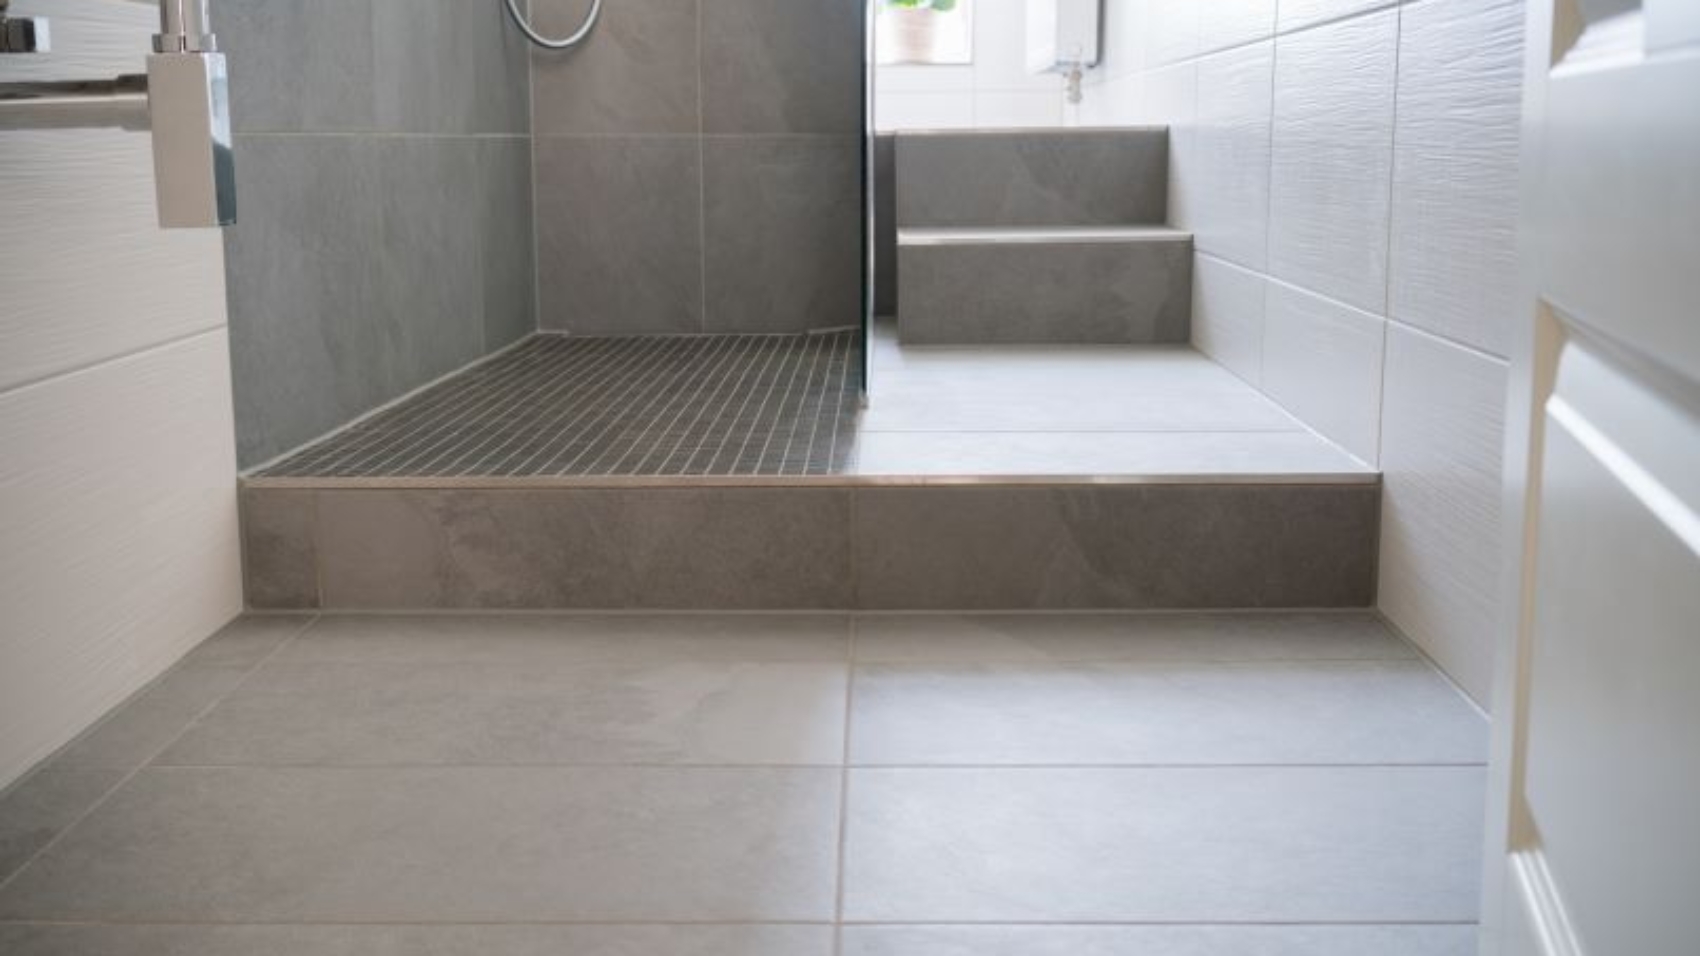 Large Bathroom Tiles